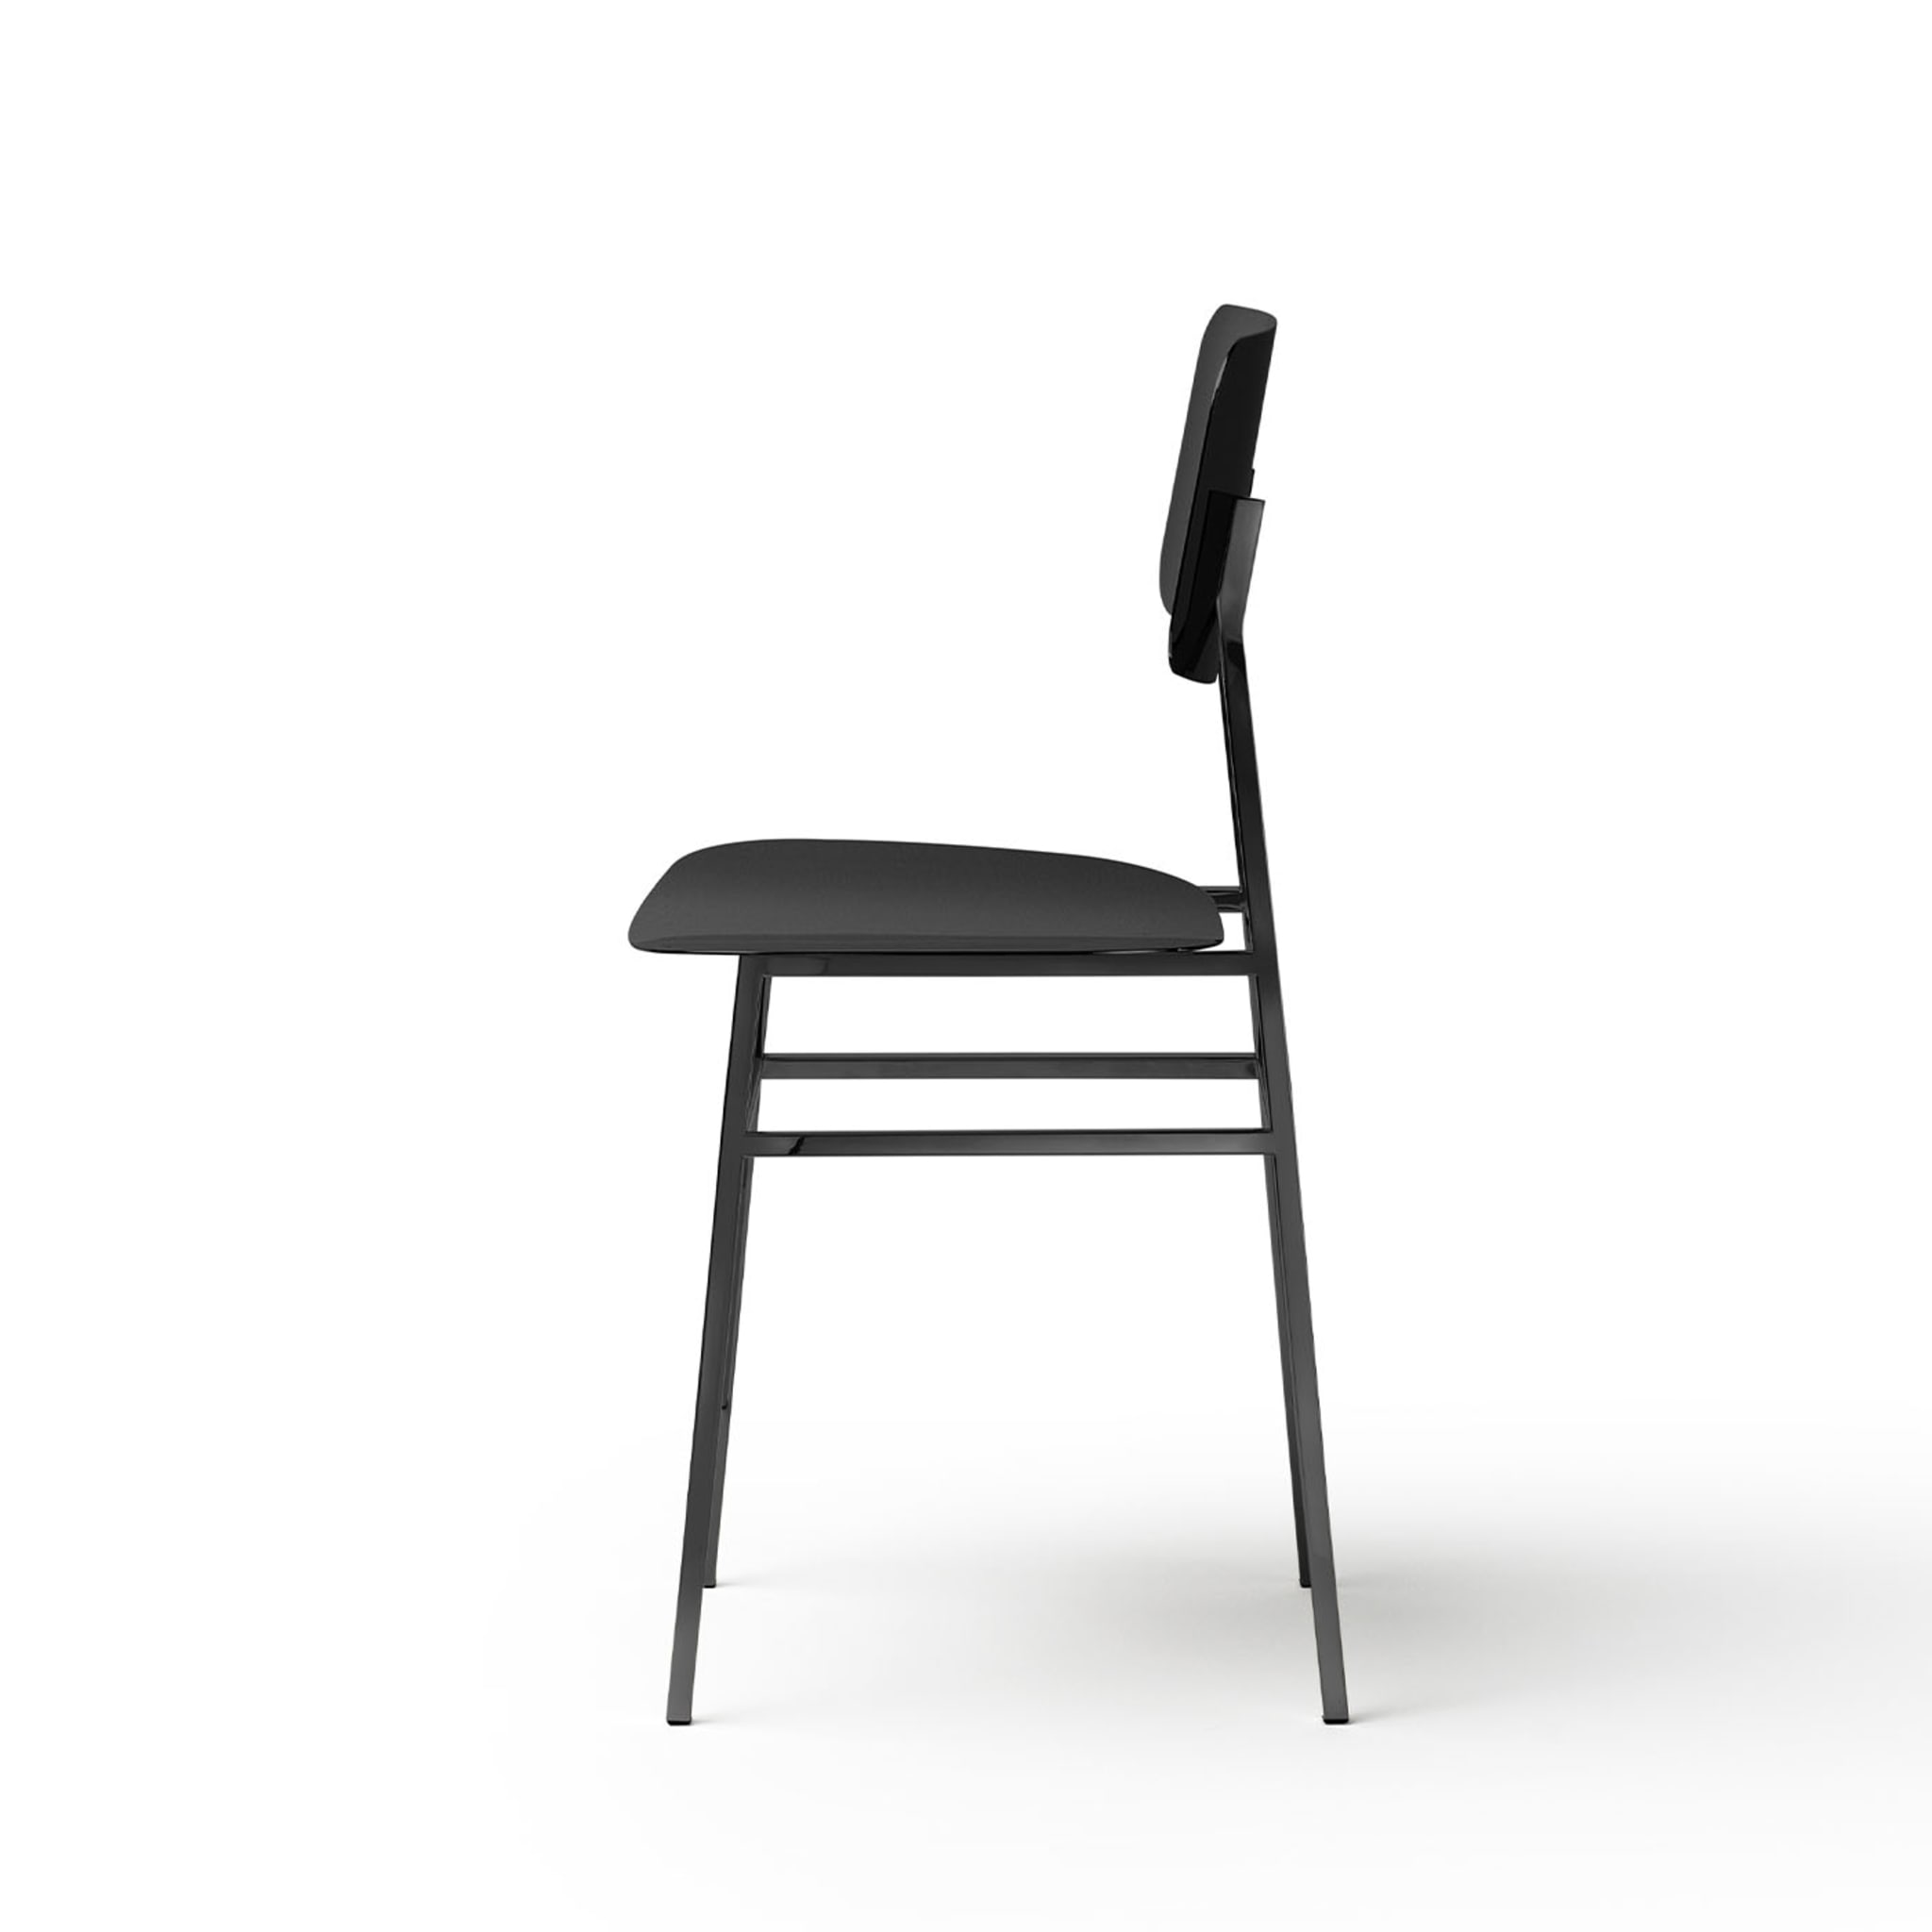 Miami Black Chair by Nika Zupanc - Alternative Ansicht 2